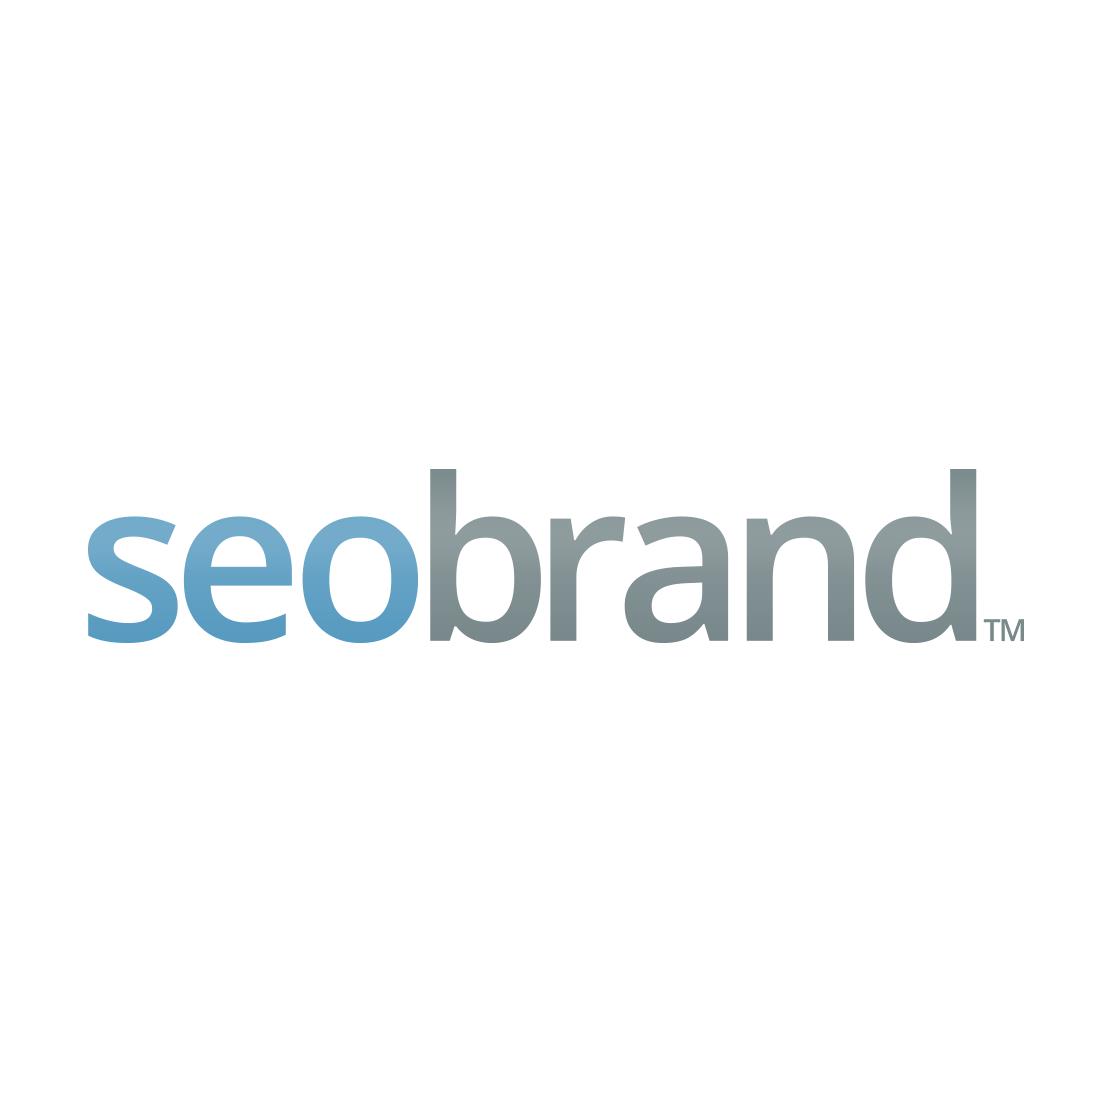 Best Real Estate SEO Company Logo: SEO Brand